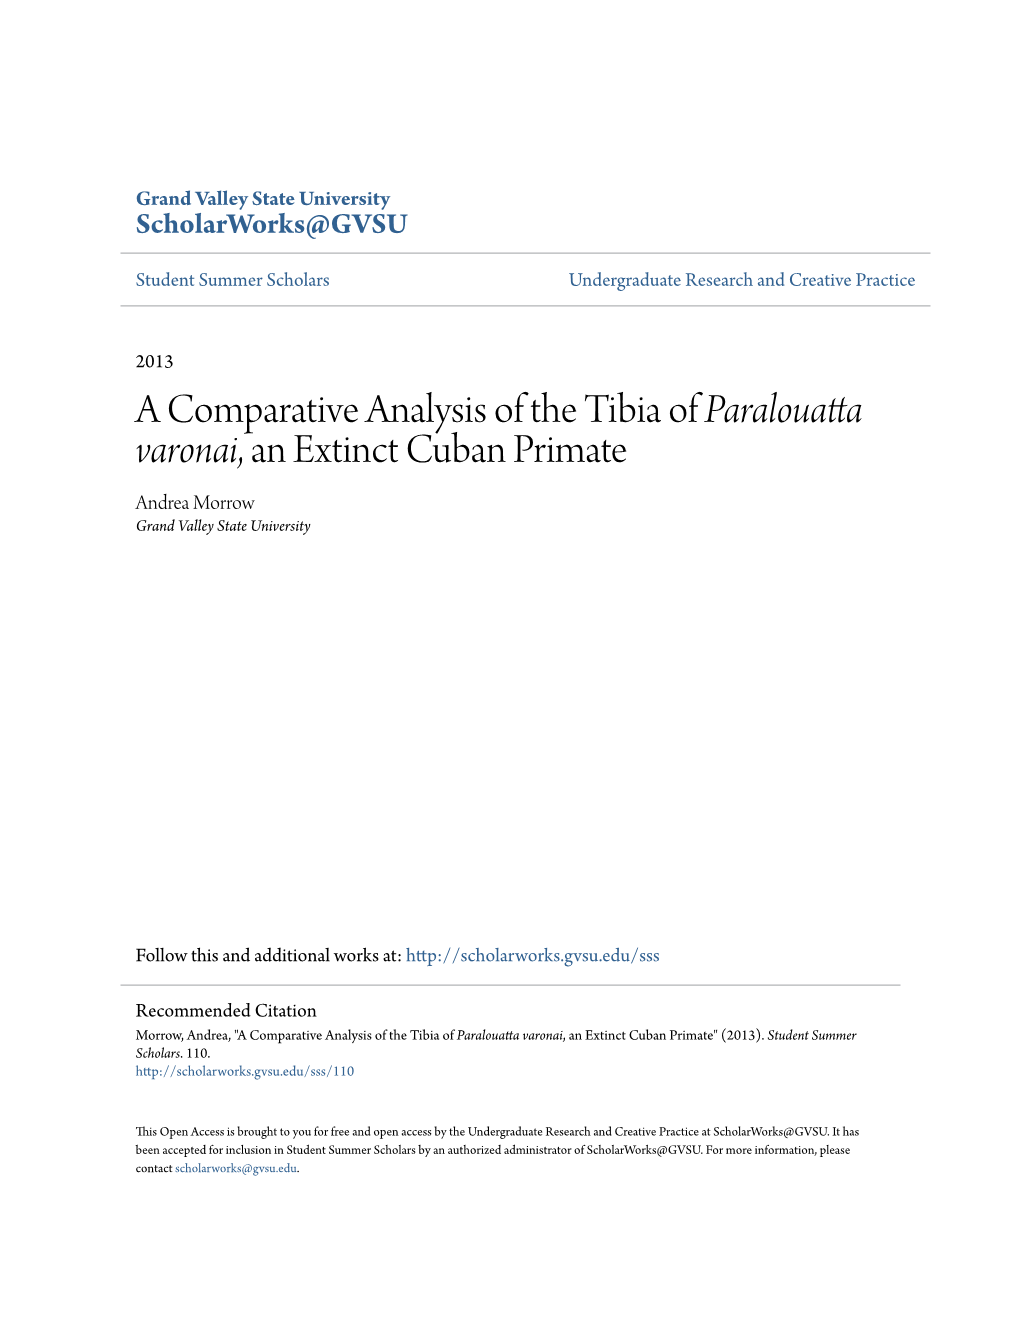 A Comparative Analysis of the Tibia of Paralouatta Varonai, an Extinct Cuban Primate Andrea Morrow Grand Valley State University